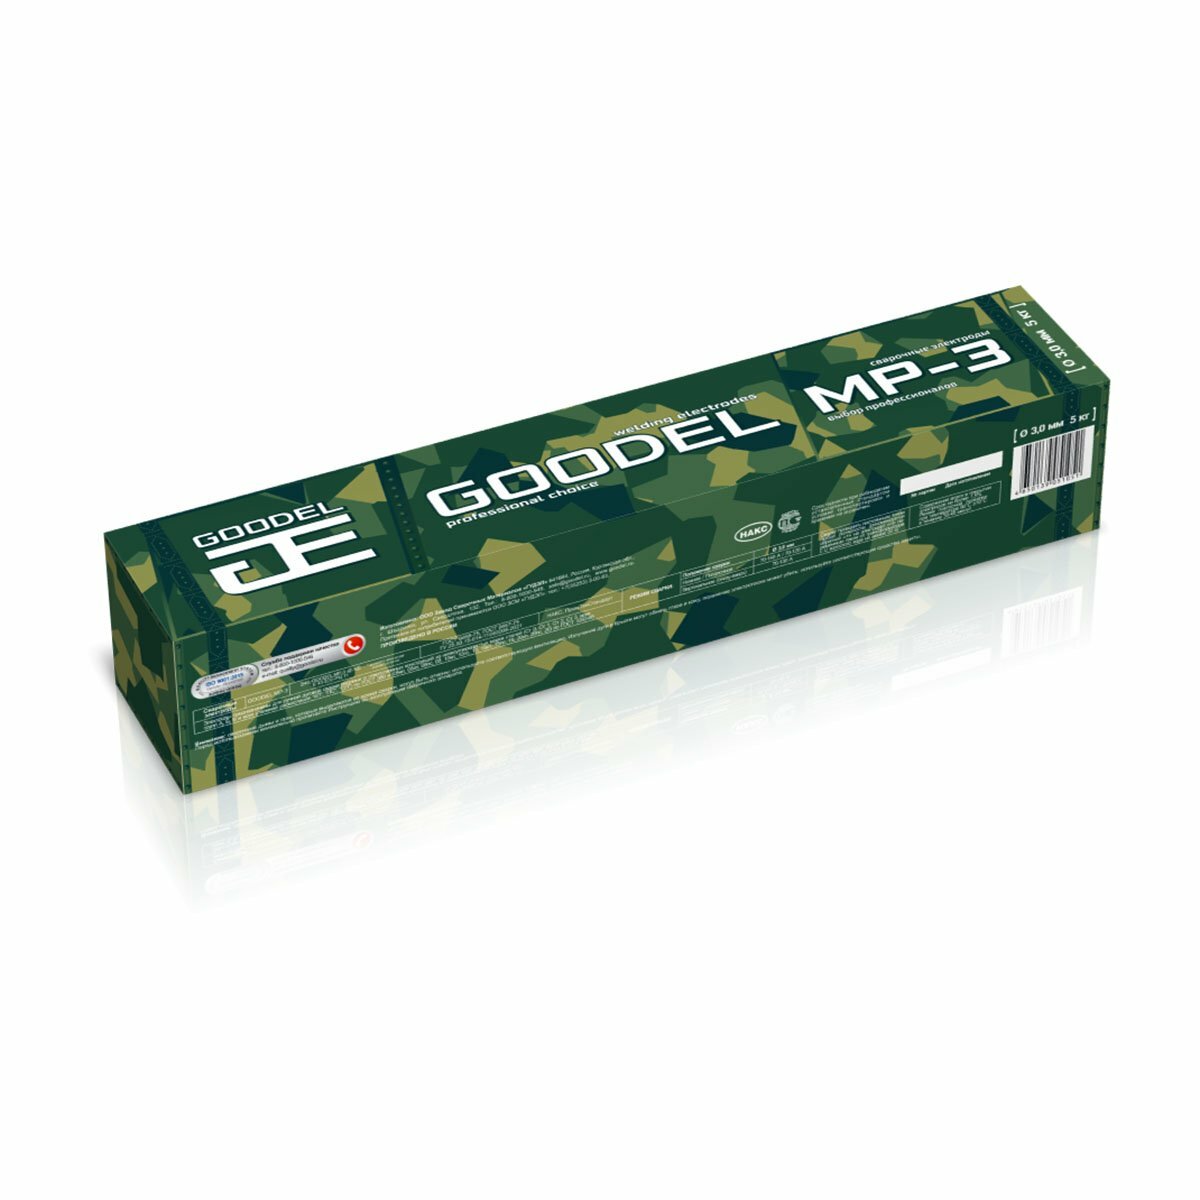 Электроды сварочные Goodel МР-3, 3 мм, 5 кг, зеленые